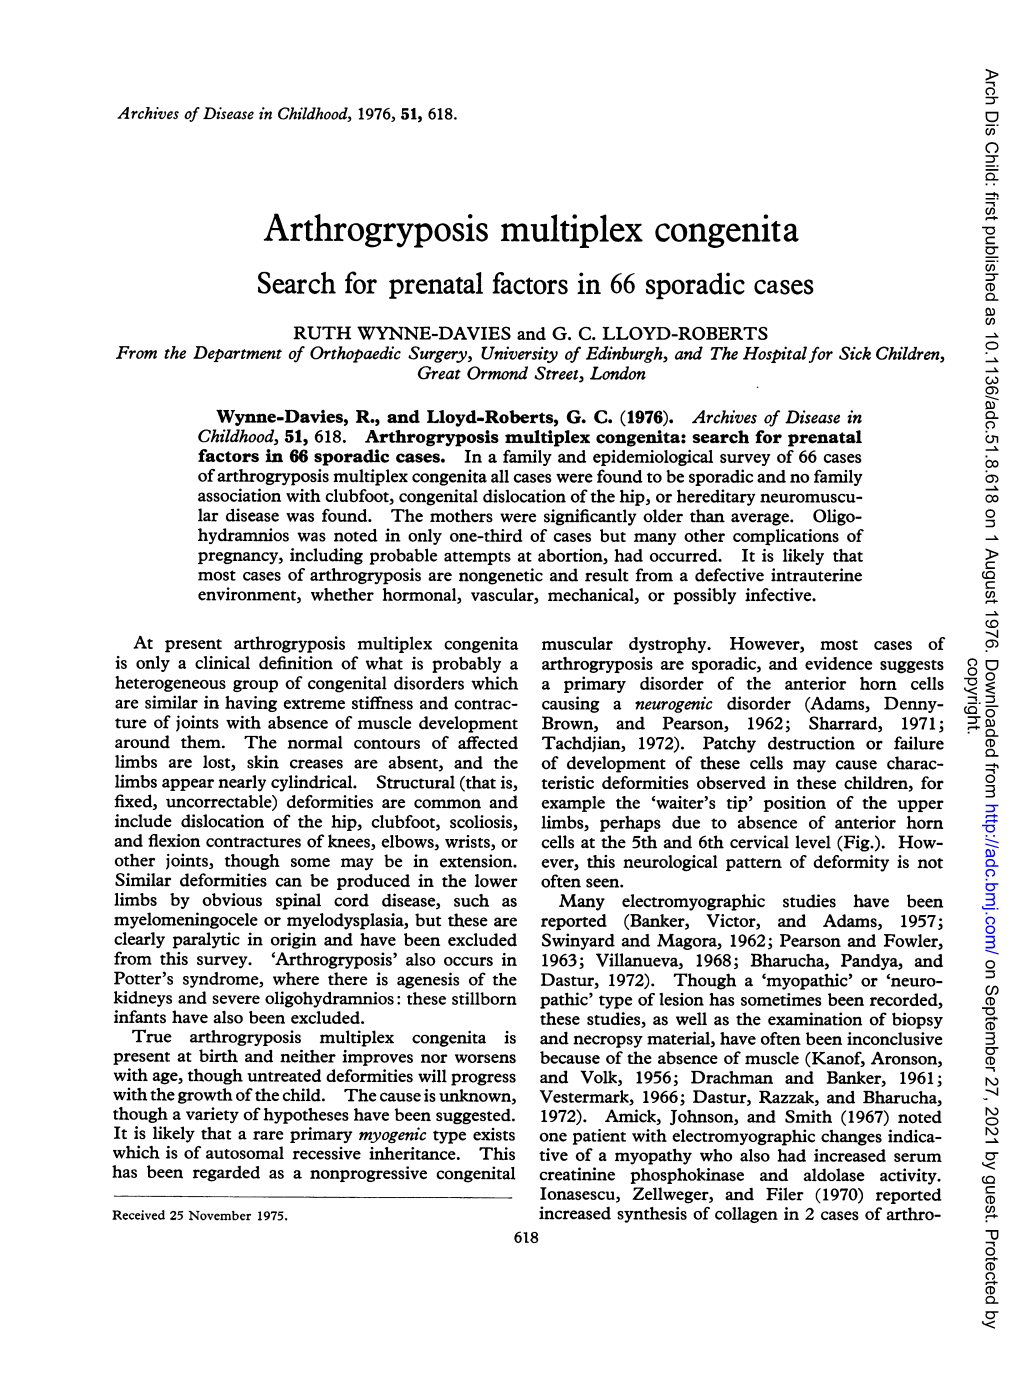 Arthrogryposis Multiplex Congenita Search for Prenatal Factors in 66 Sporadic Cases RUTH WYNNE-DAVIES and G